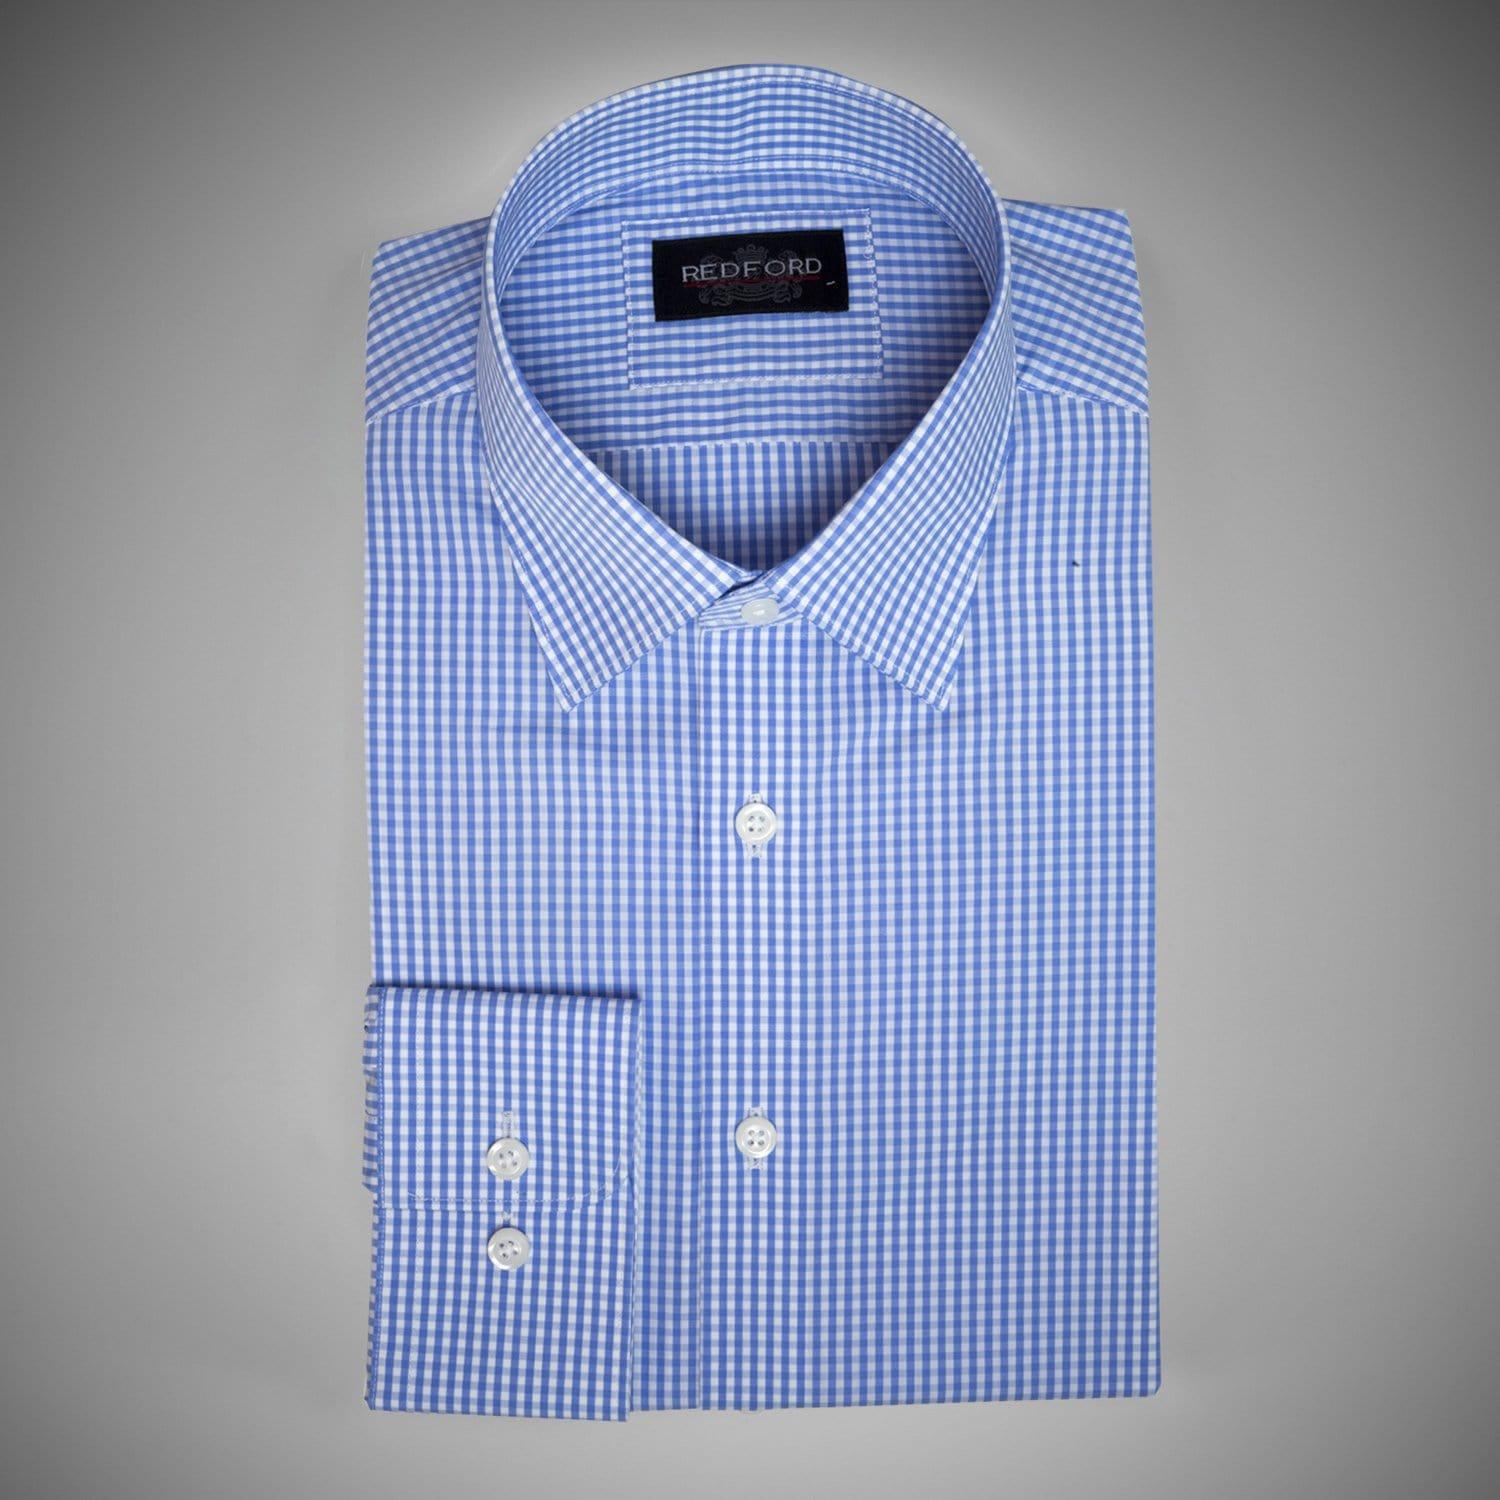 Classic Blue Gingham Check Shirt - Just White Shirts